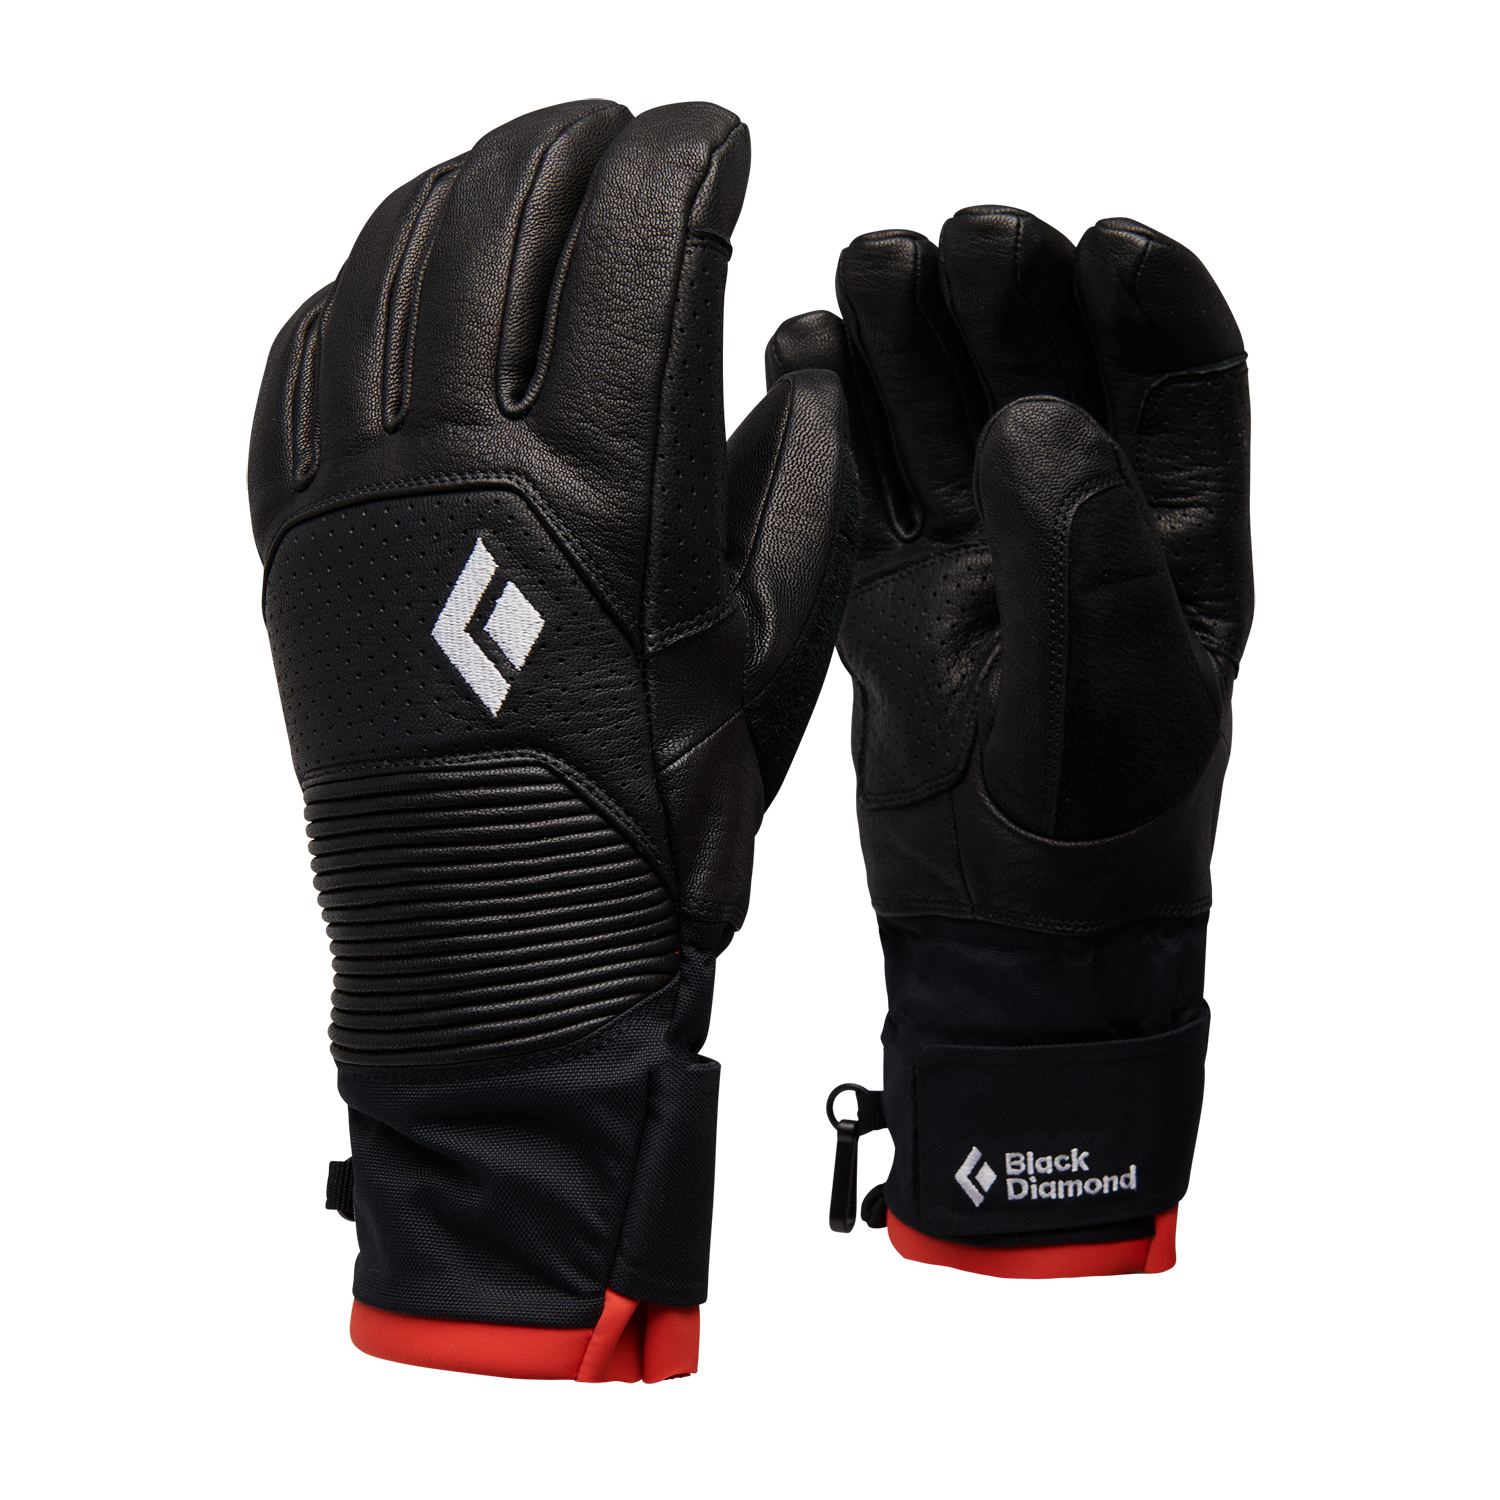 Damskie rękawice narciarskie Black Diamond Women's Impulse Gloves black/black - XS